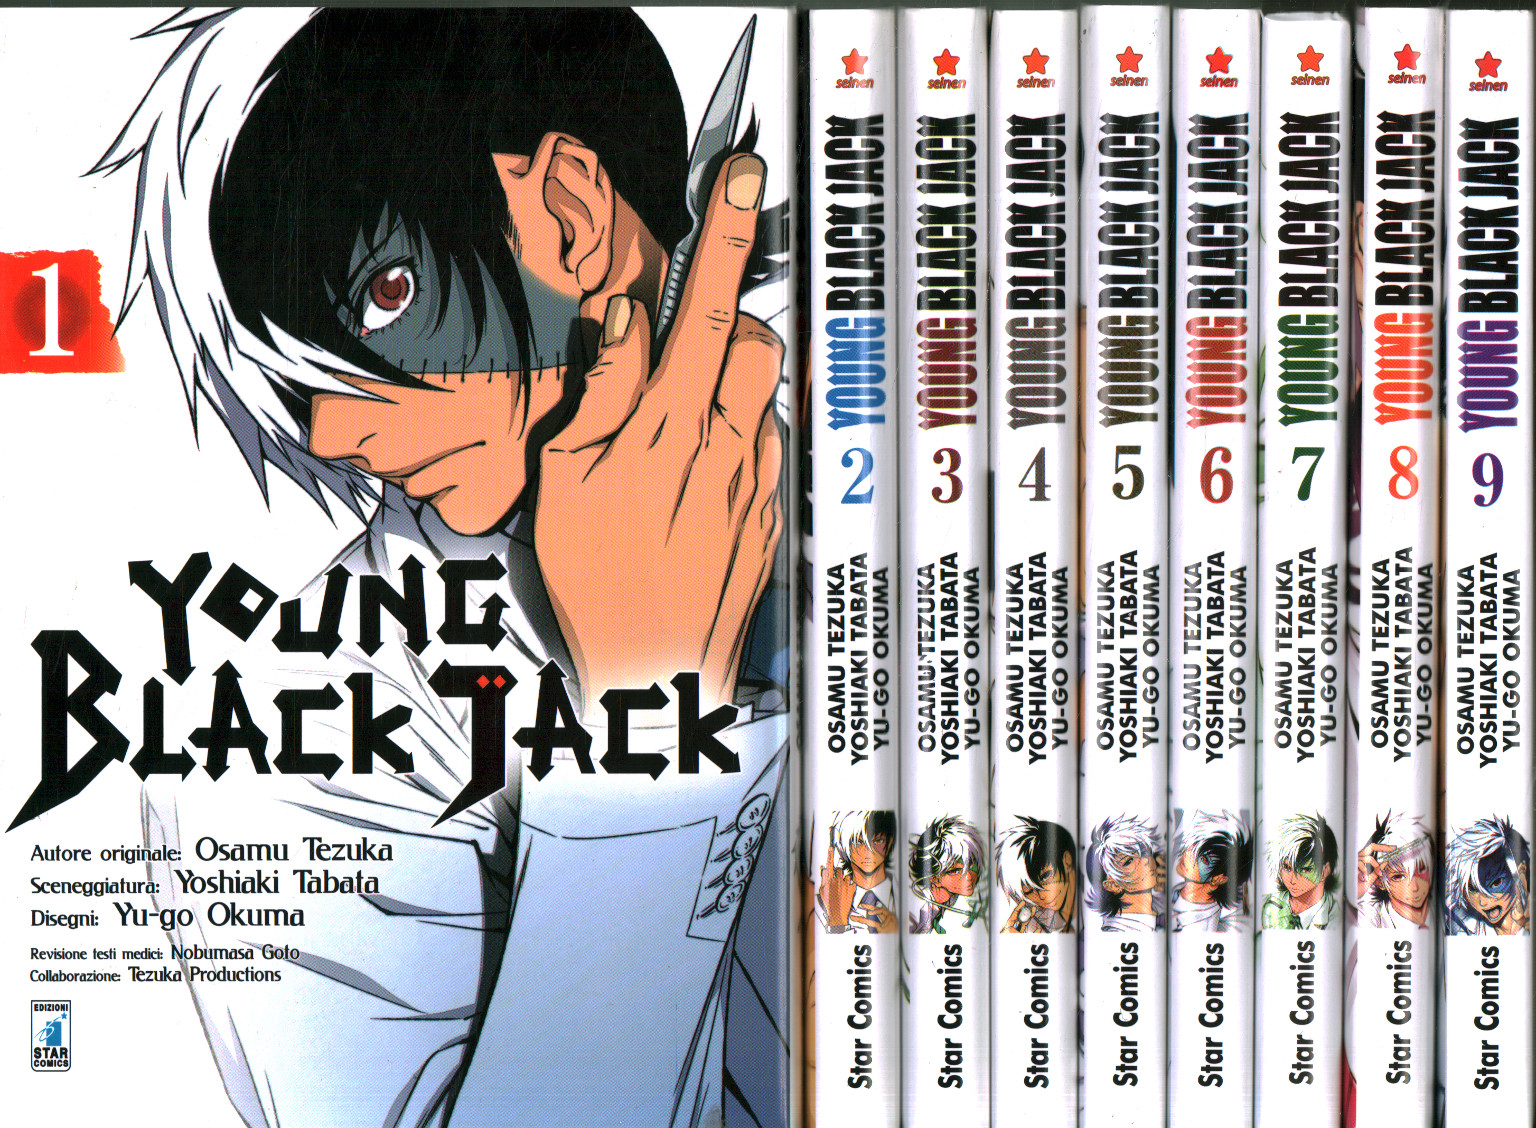 Joven Black Jack. Secuencia completa (9 volúmenes), Osamu Tezuka Yoshiaki Tabata Yu-go Okuma